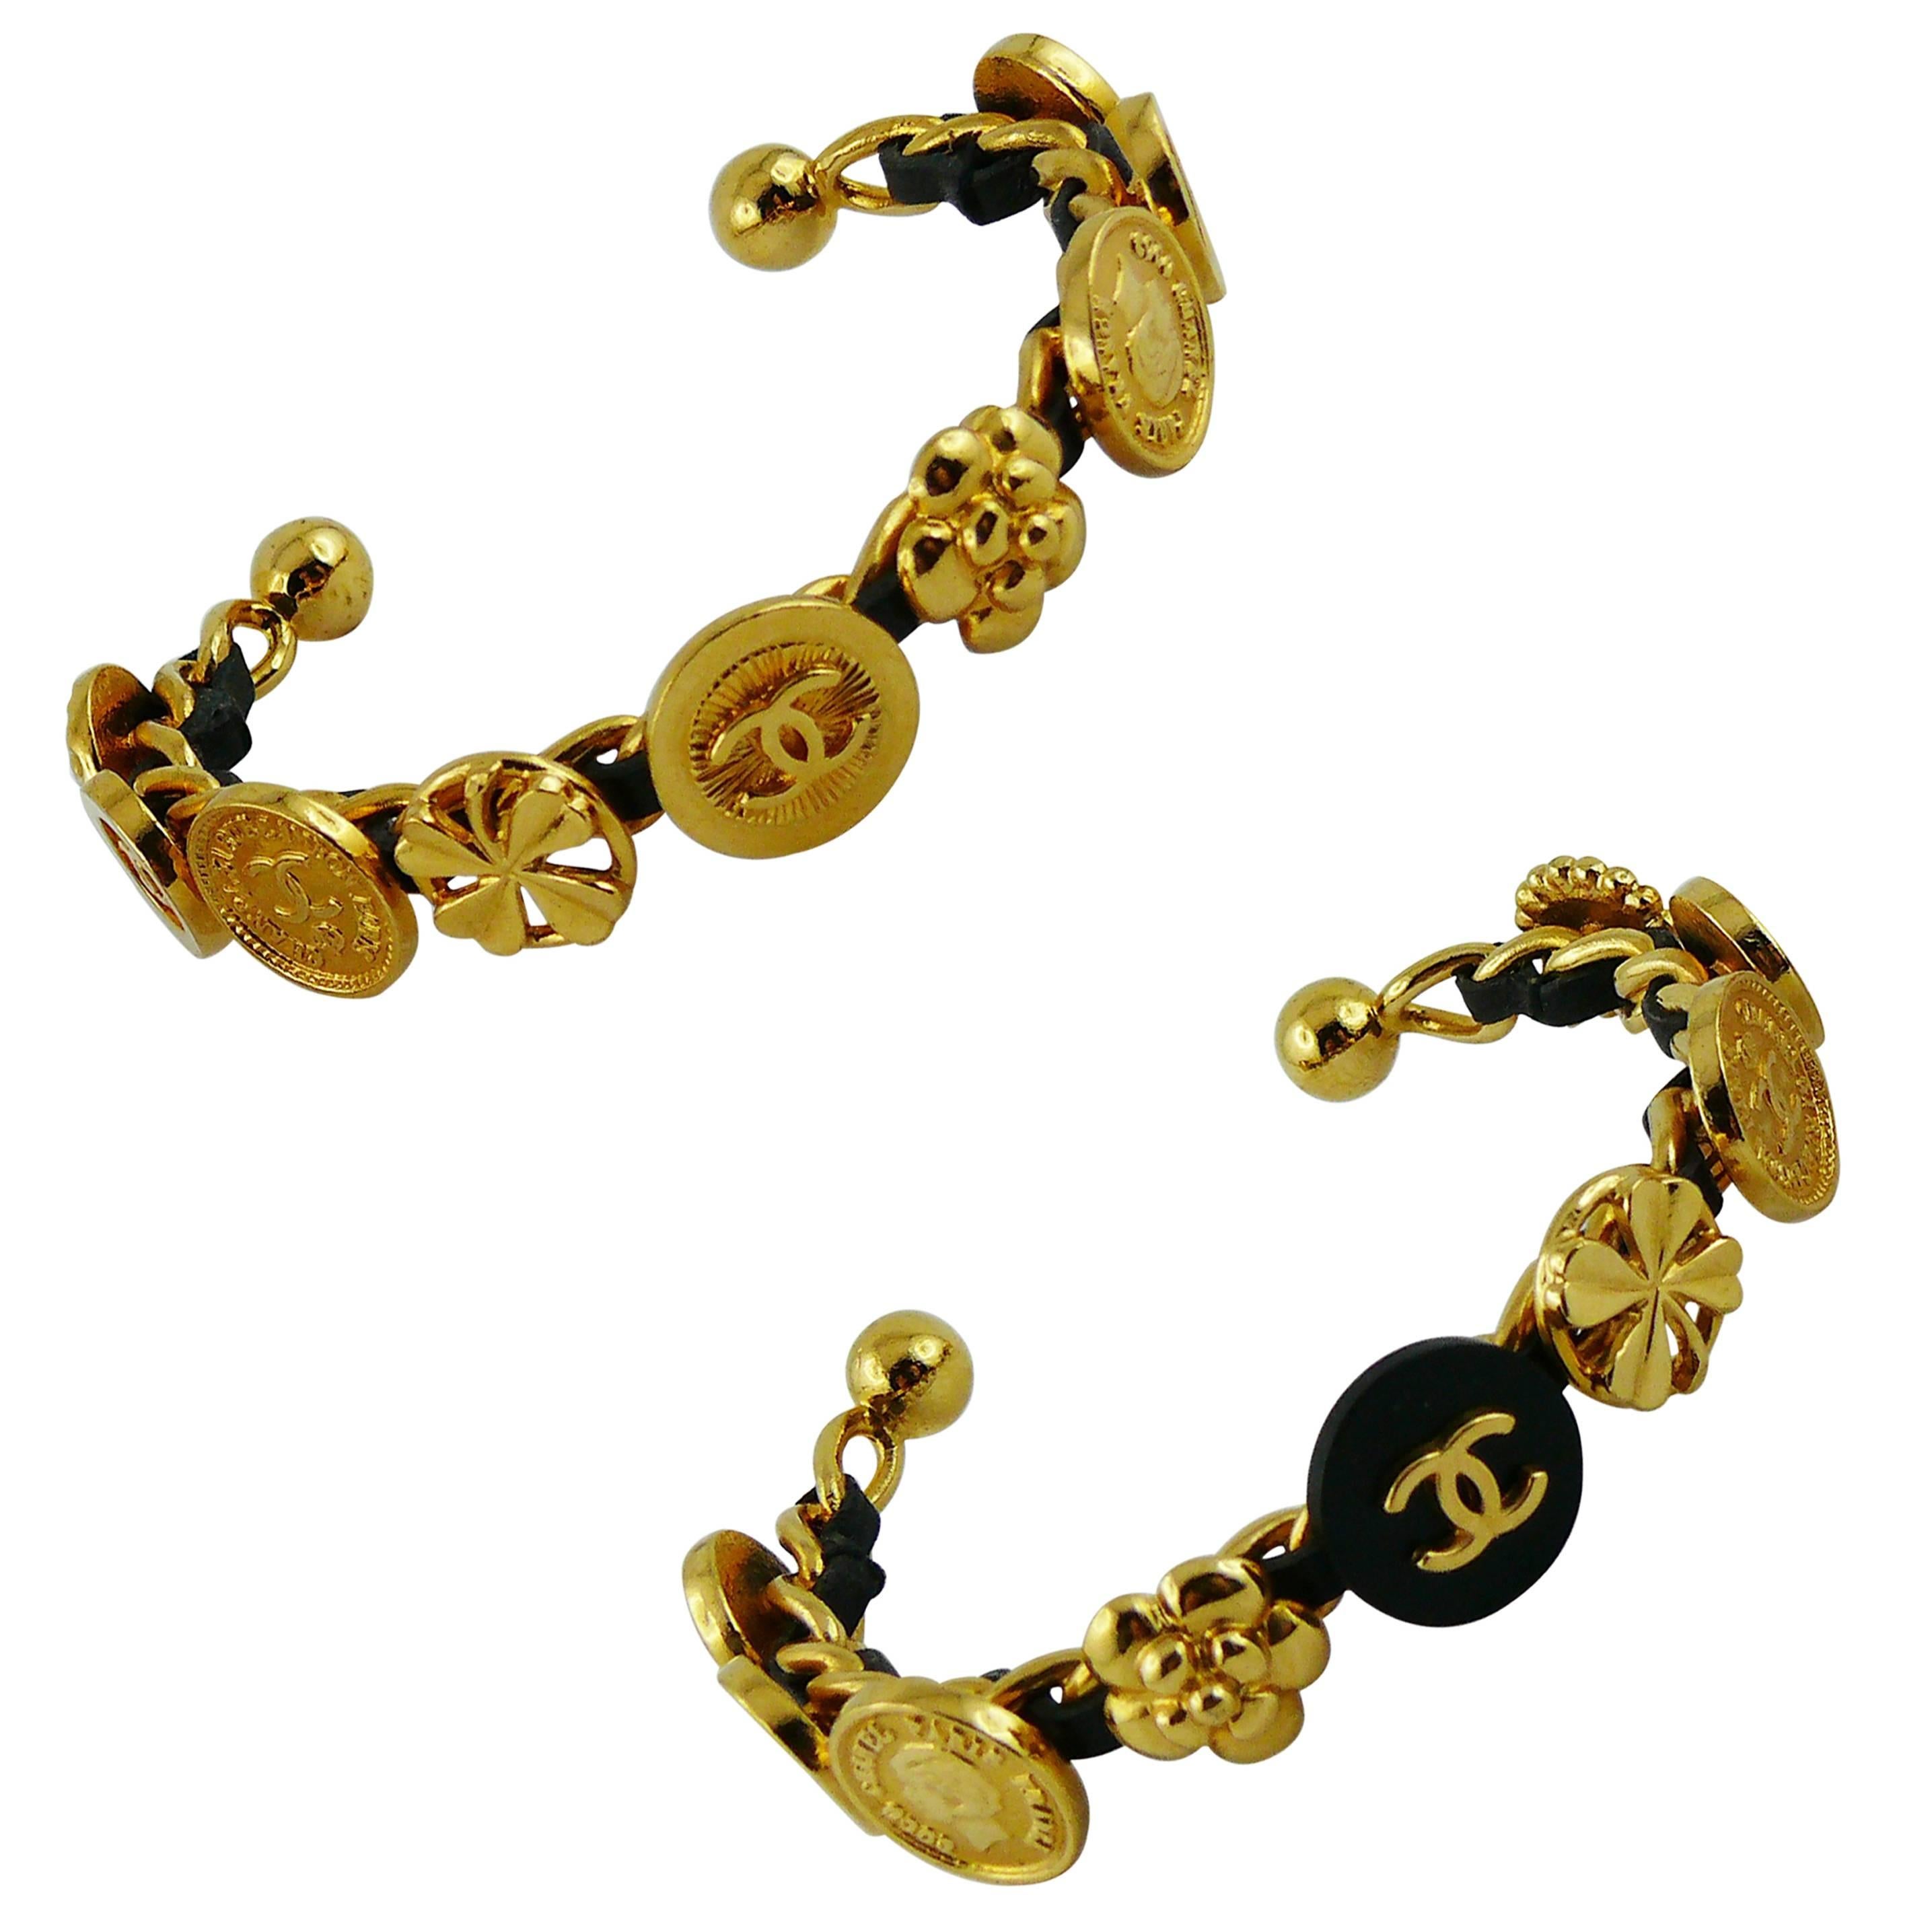 Chanel Vintage Rare Interwoven Gold Chain & Black Leather Coin Bracelet Set